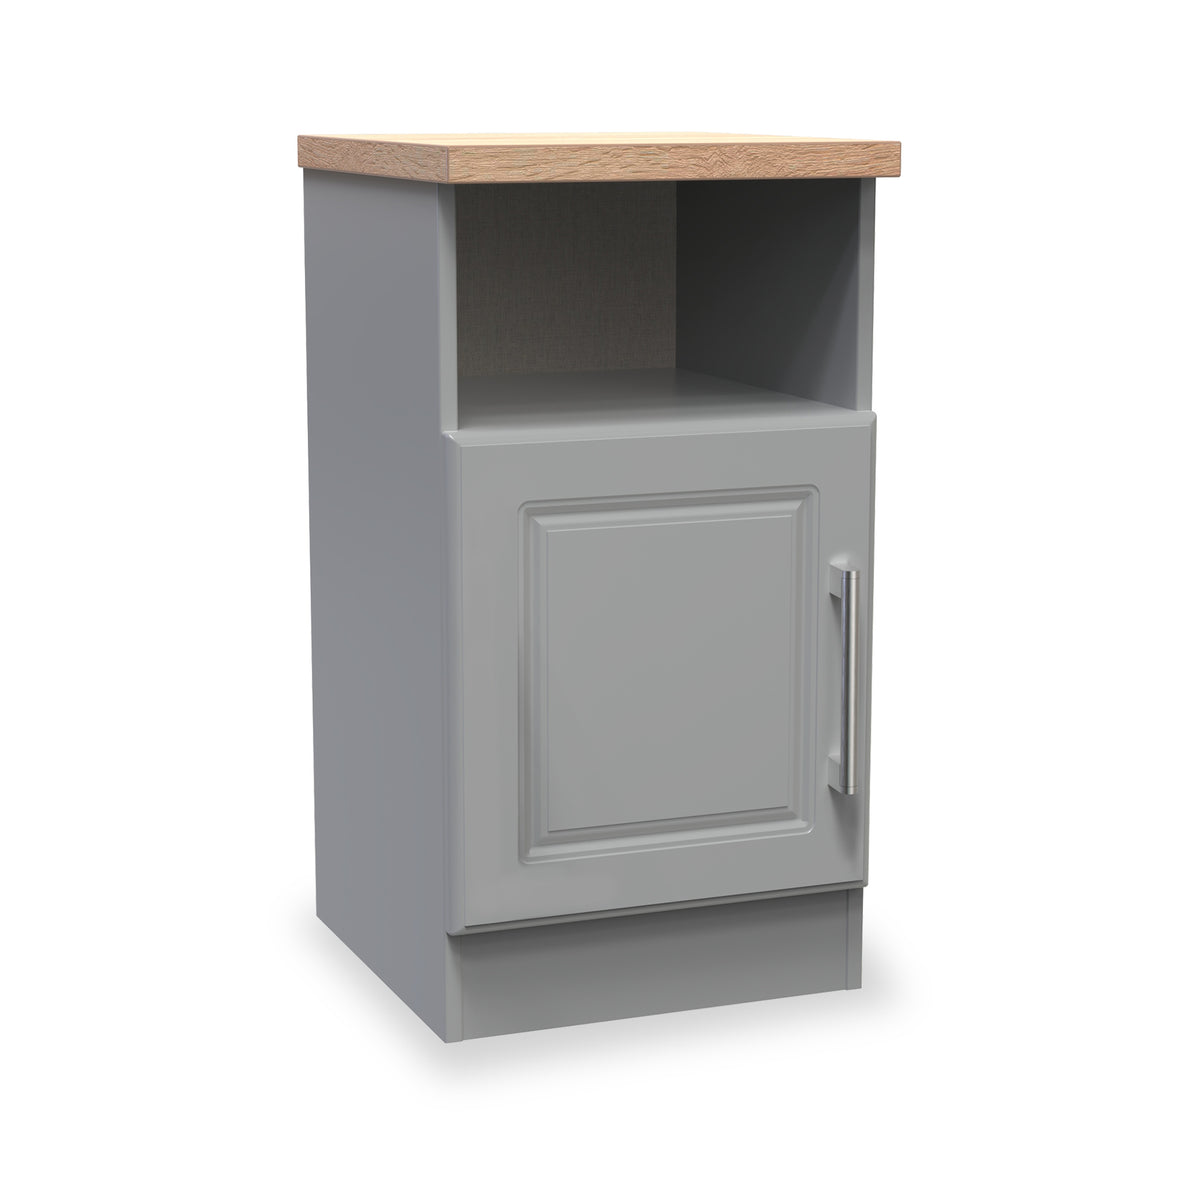 Talland Grey 1 Door Cabinet from Roseland Furniture